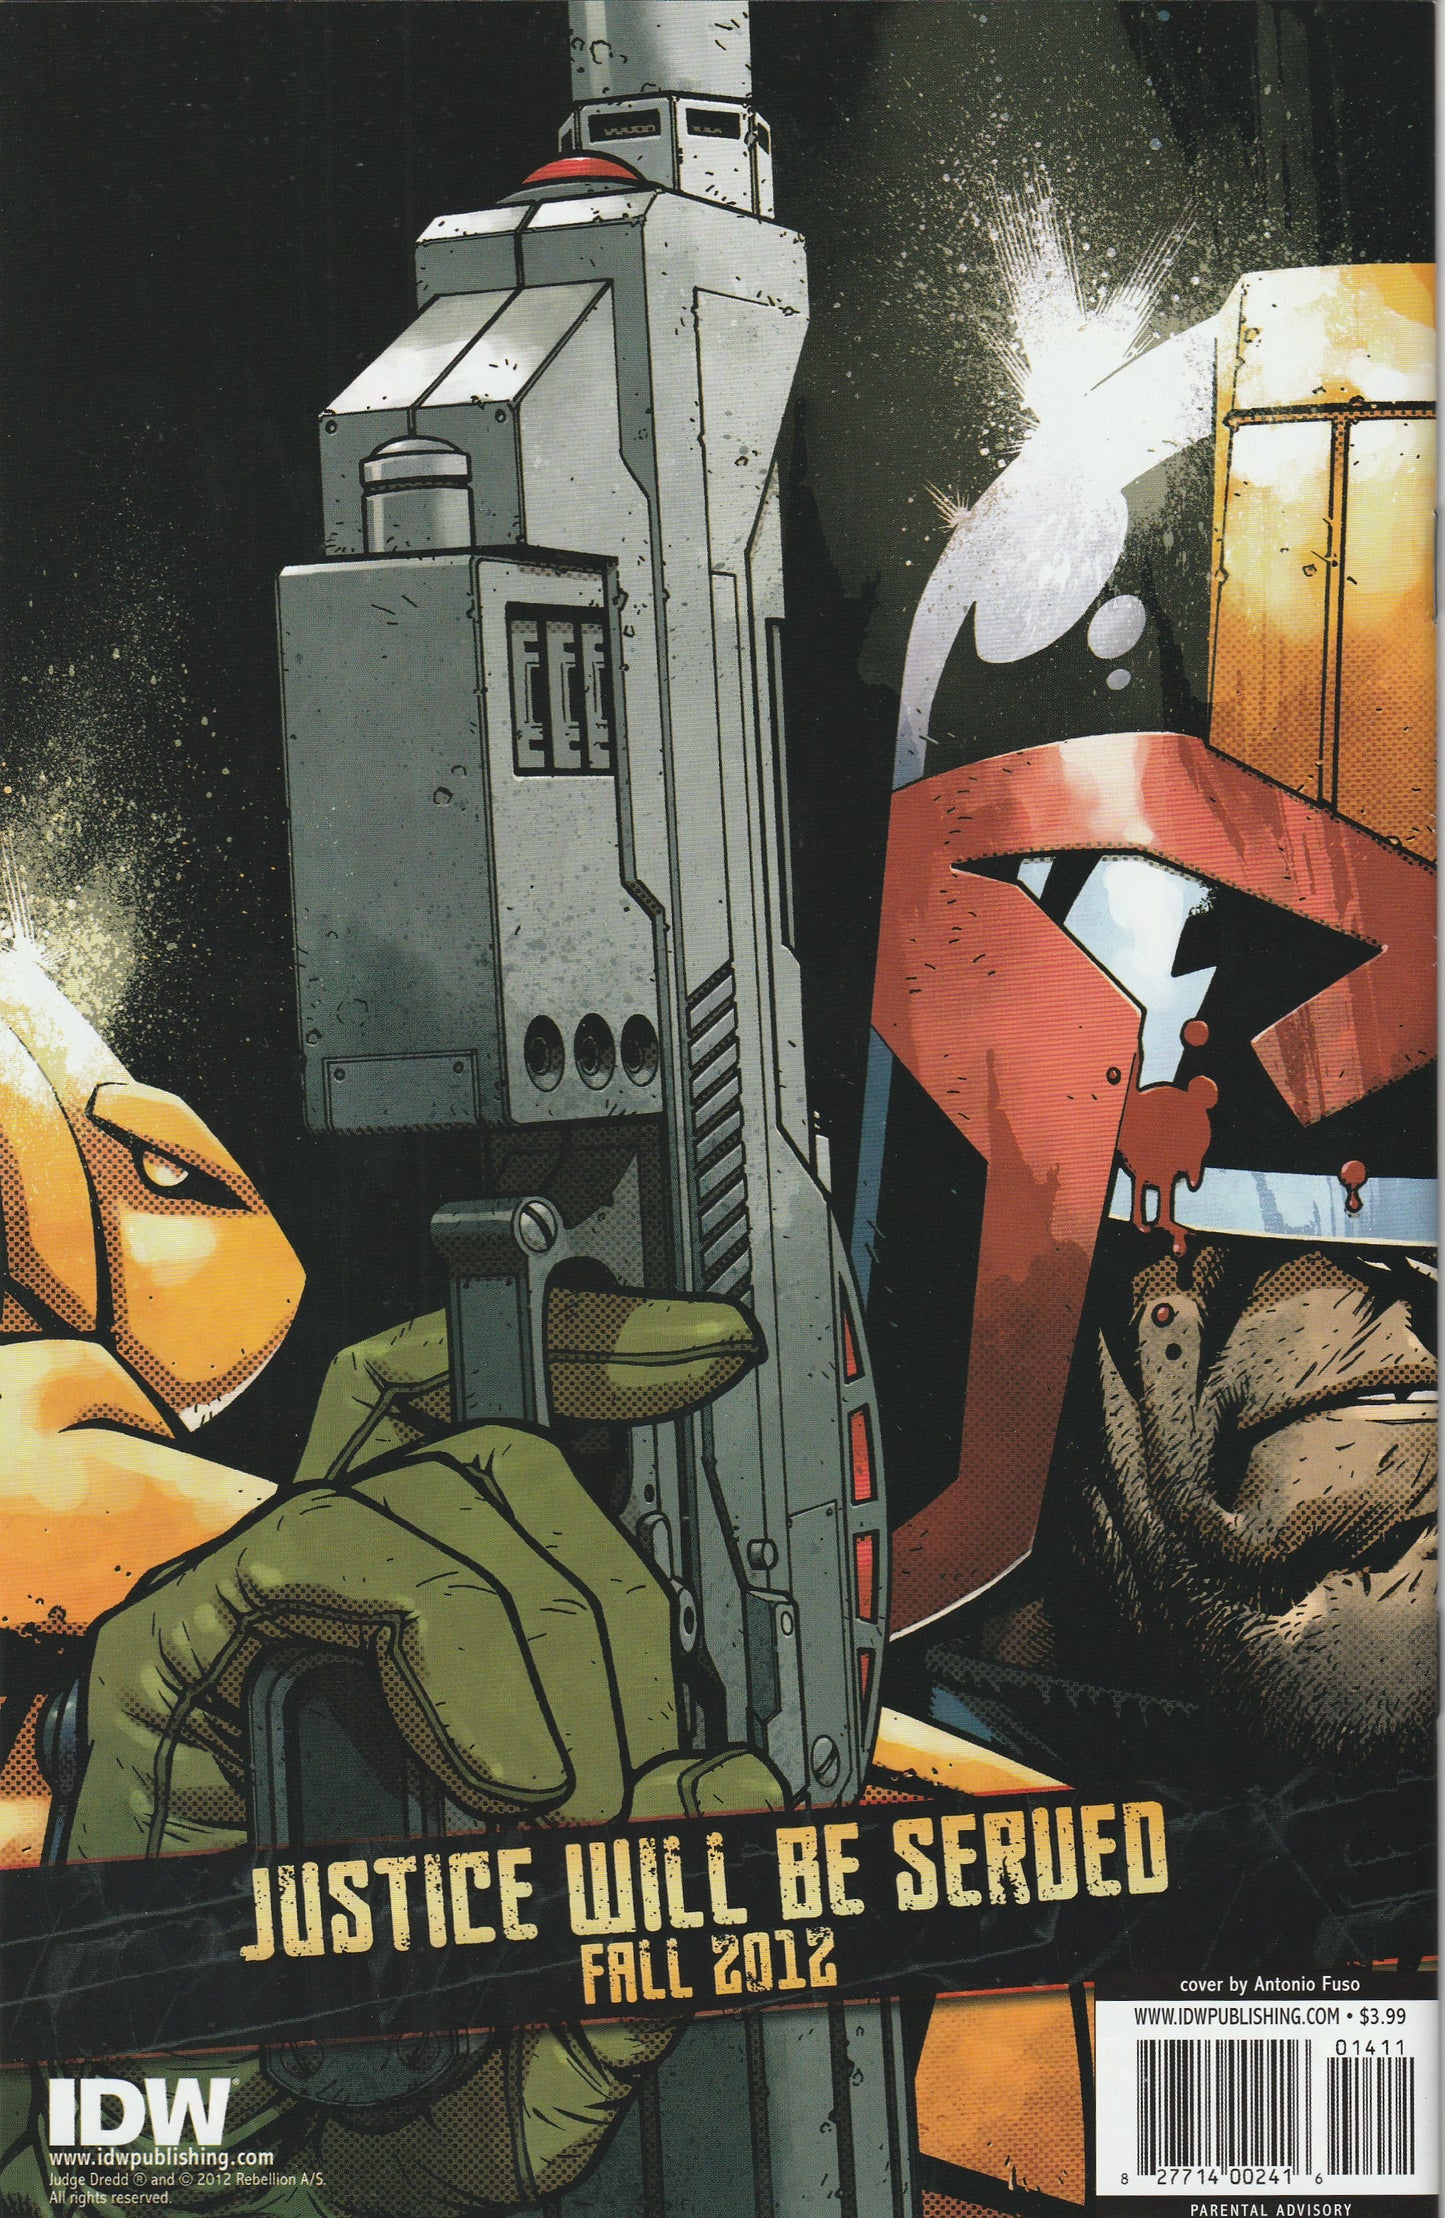 G.I. Joe: Cobra #14 (2012) - Cover A by Antonio Fuso